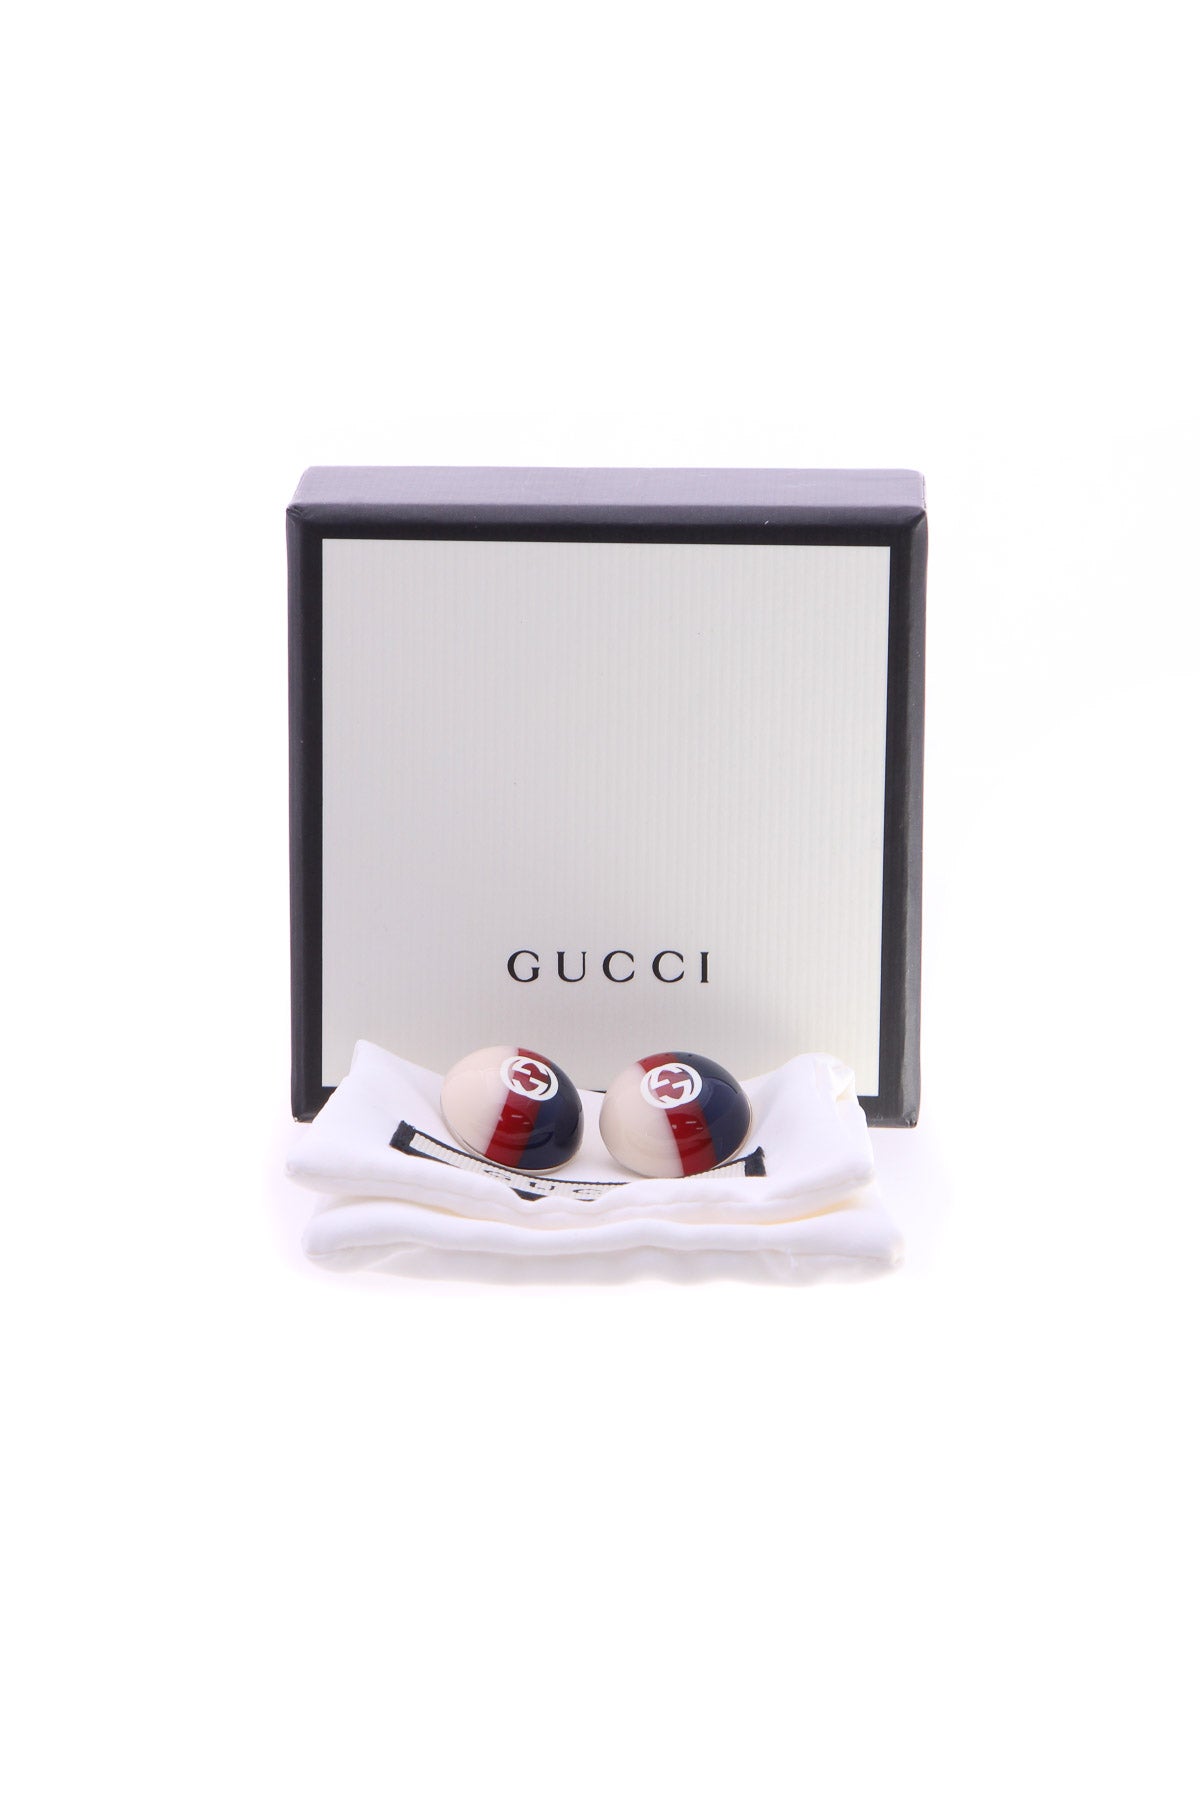 Shop Louis Vuitton Empreinte Ear Studs White Gold And Diamonds (Q96581) by  Chocolate11